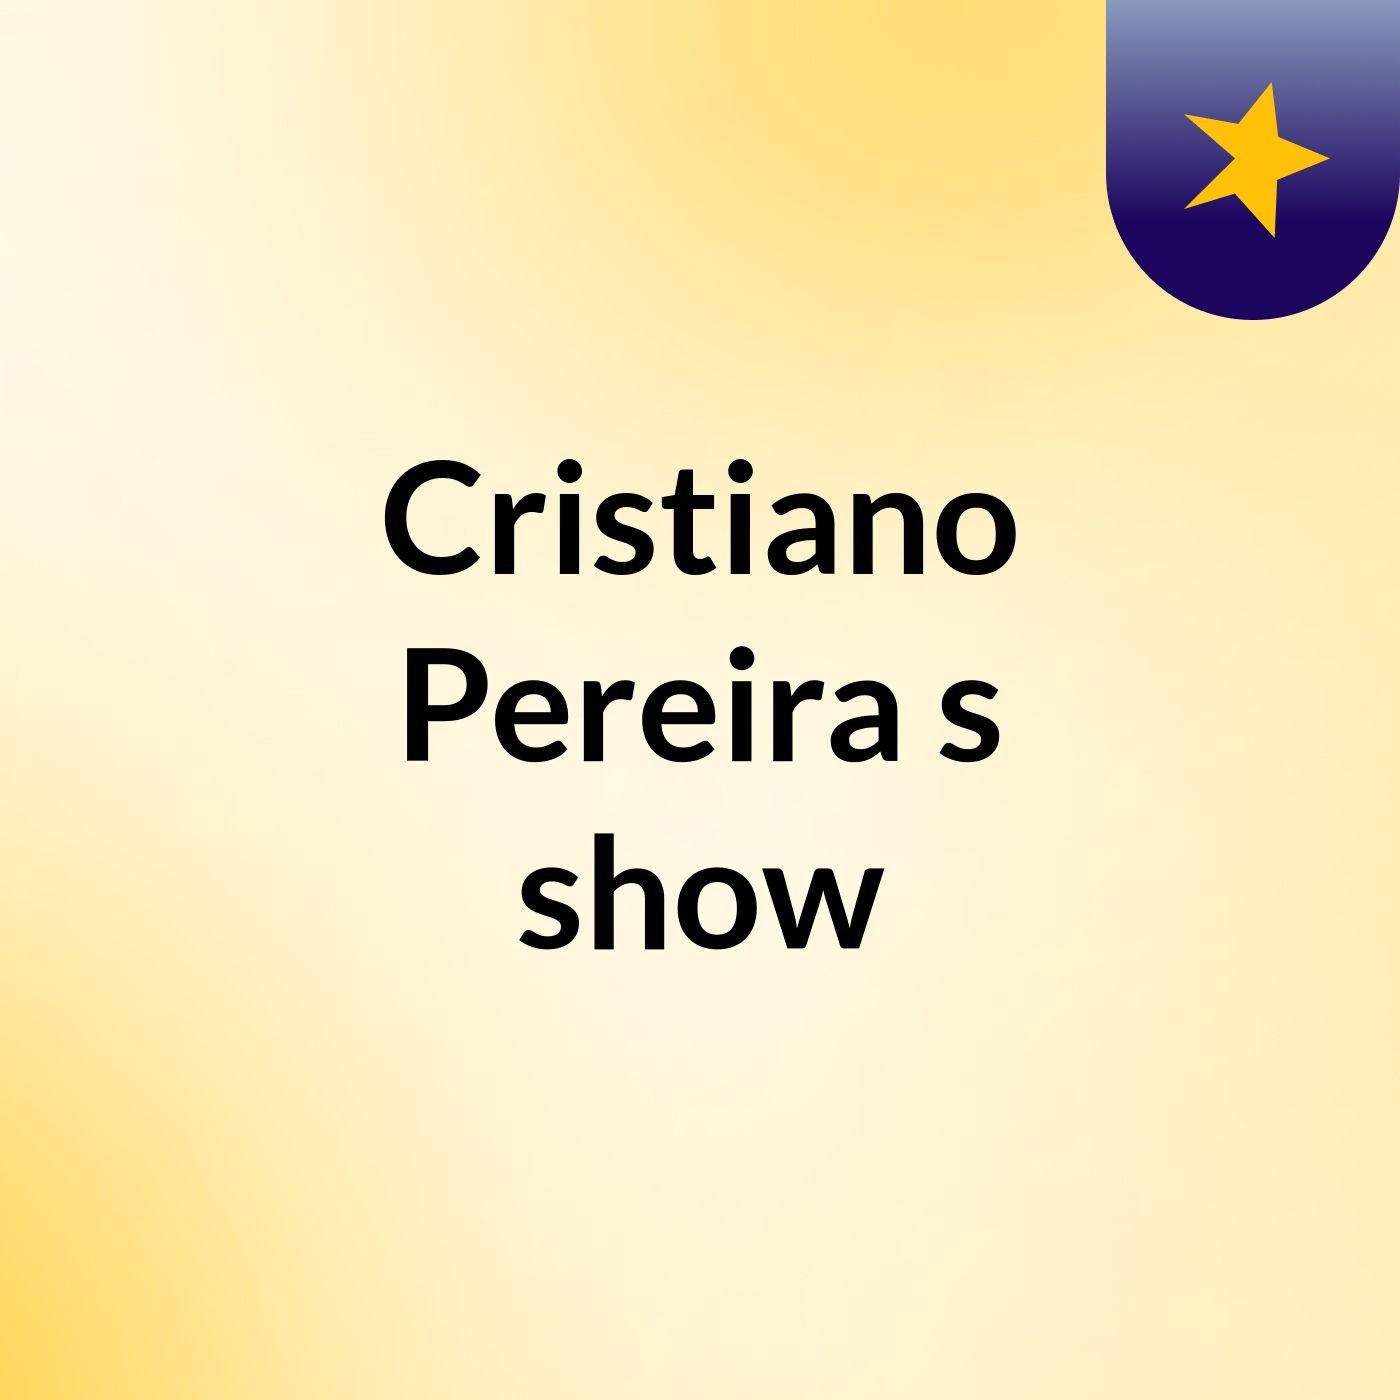 Cristiano Pereira's show